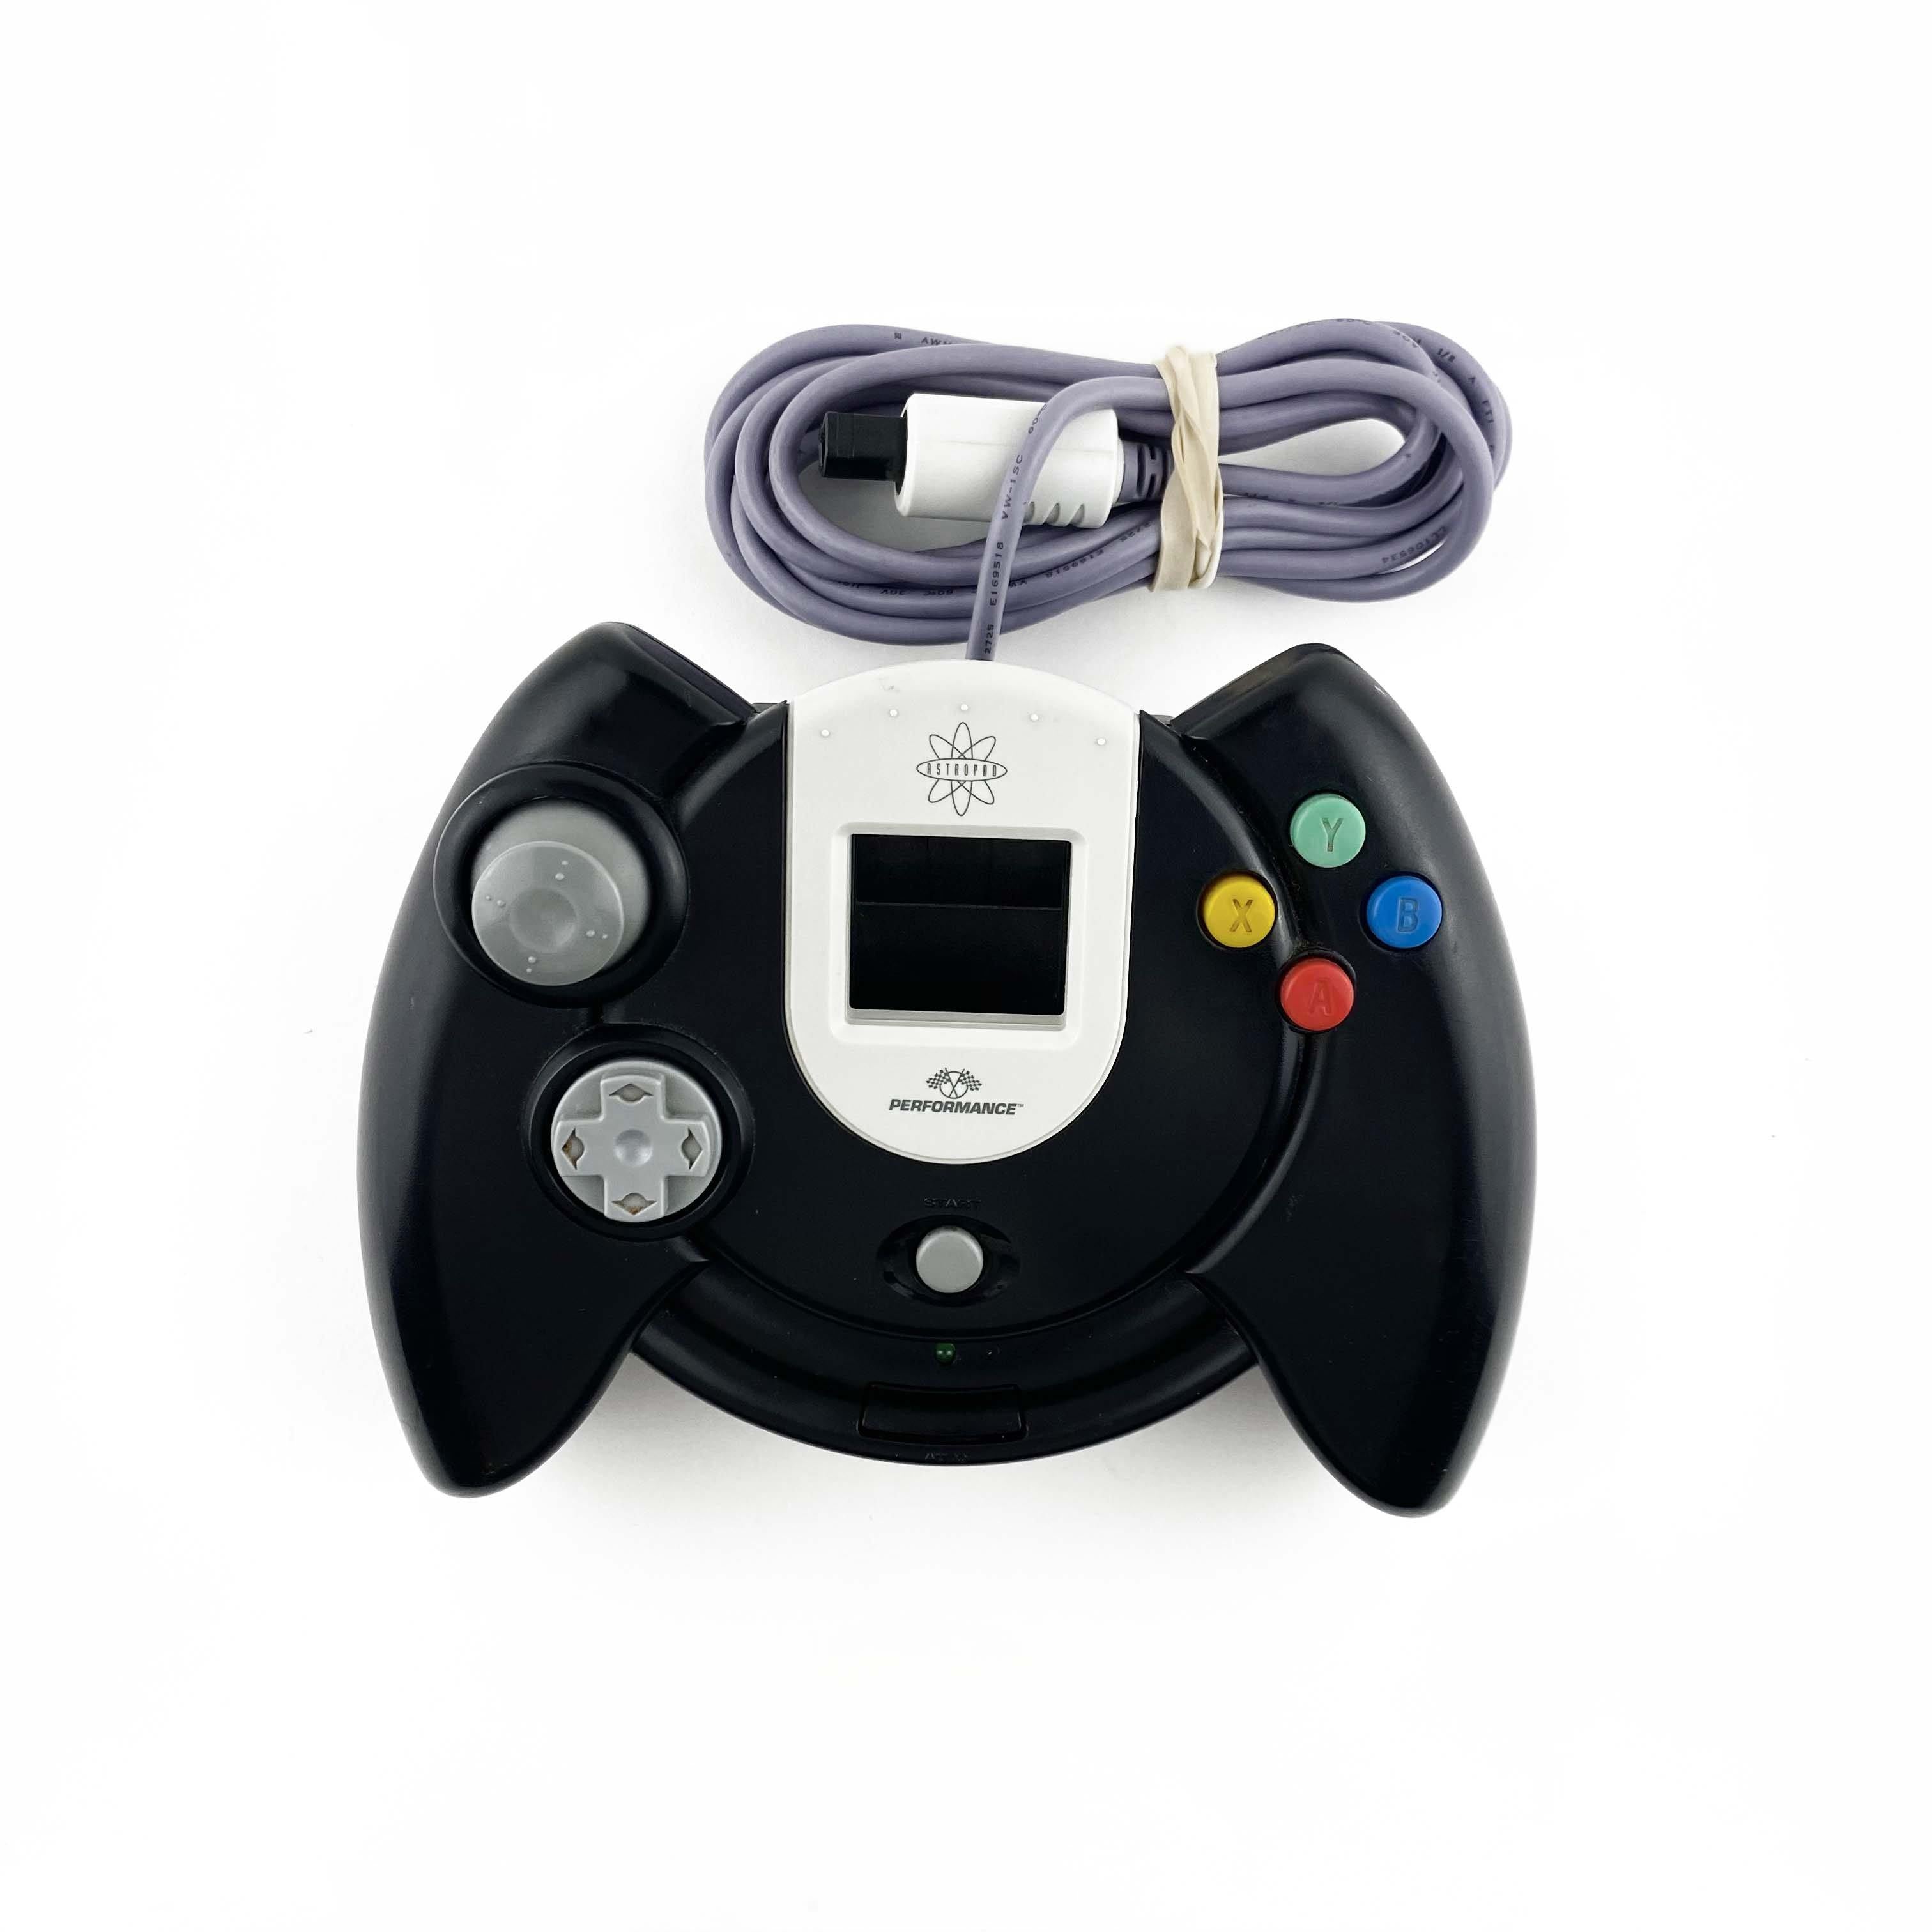 Sega Dreamcast Black Astropad Performance Controller